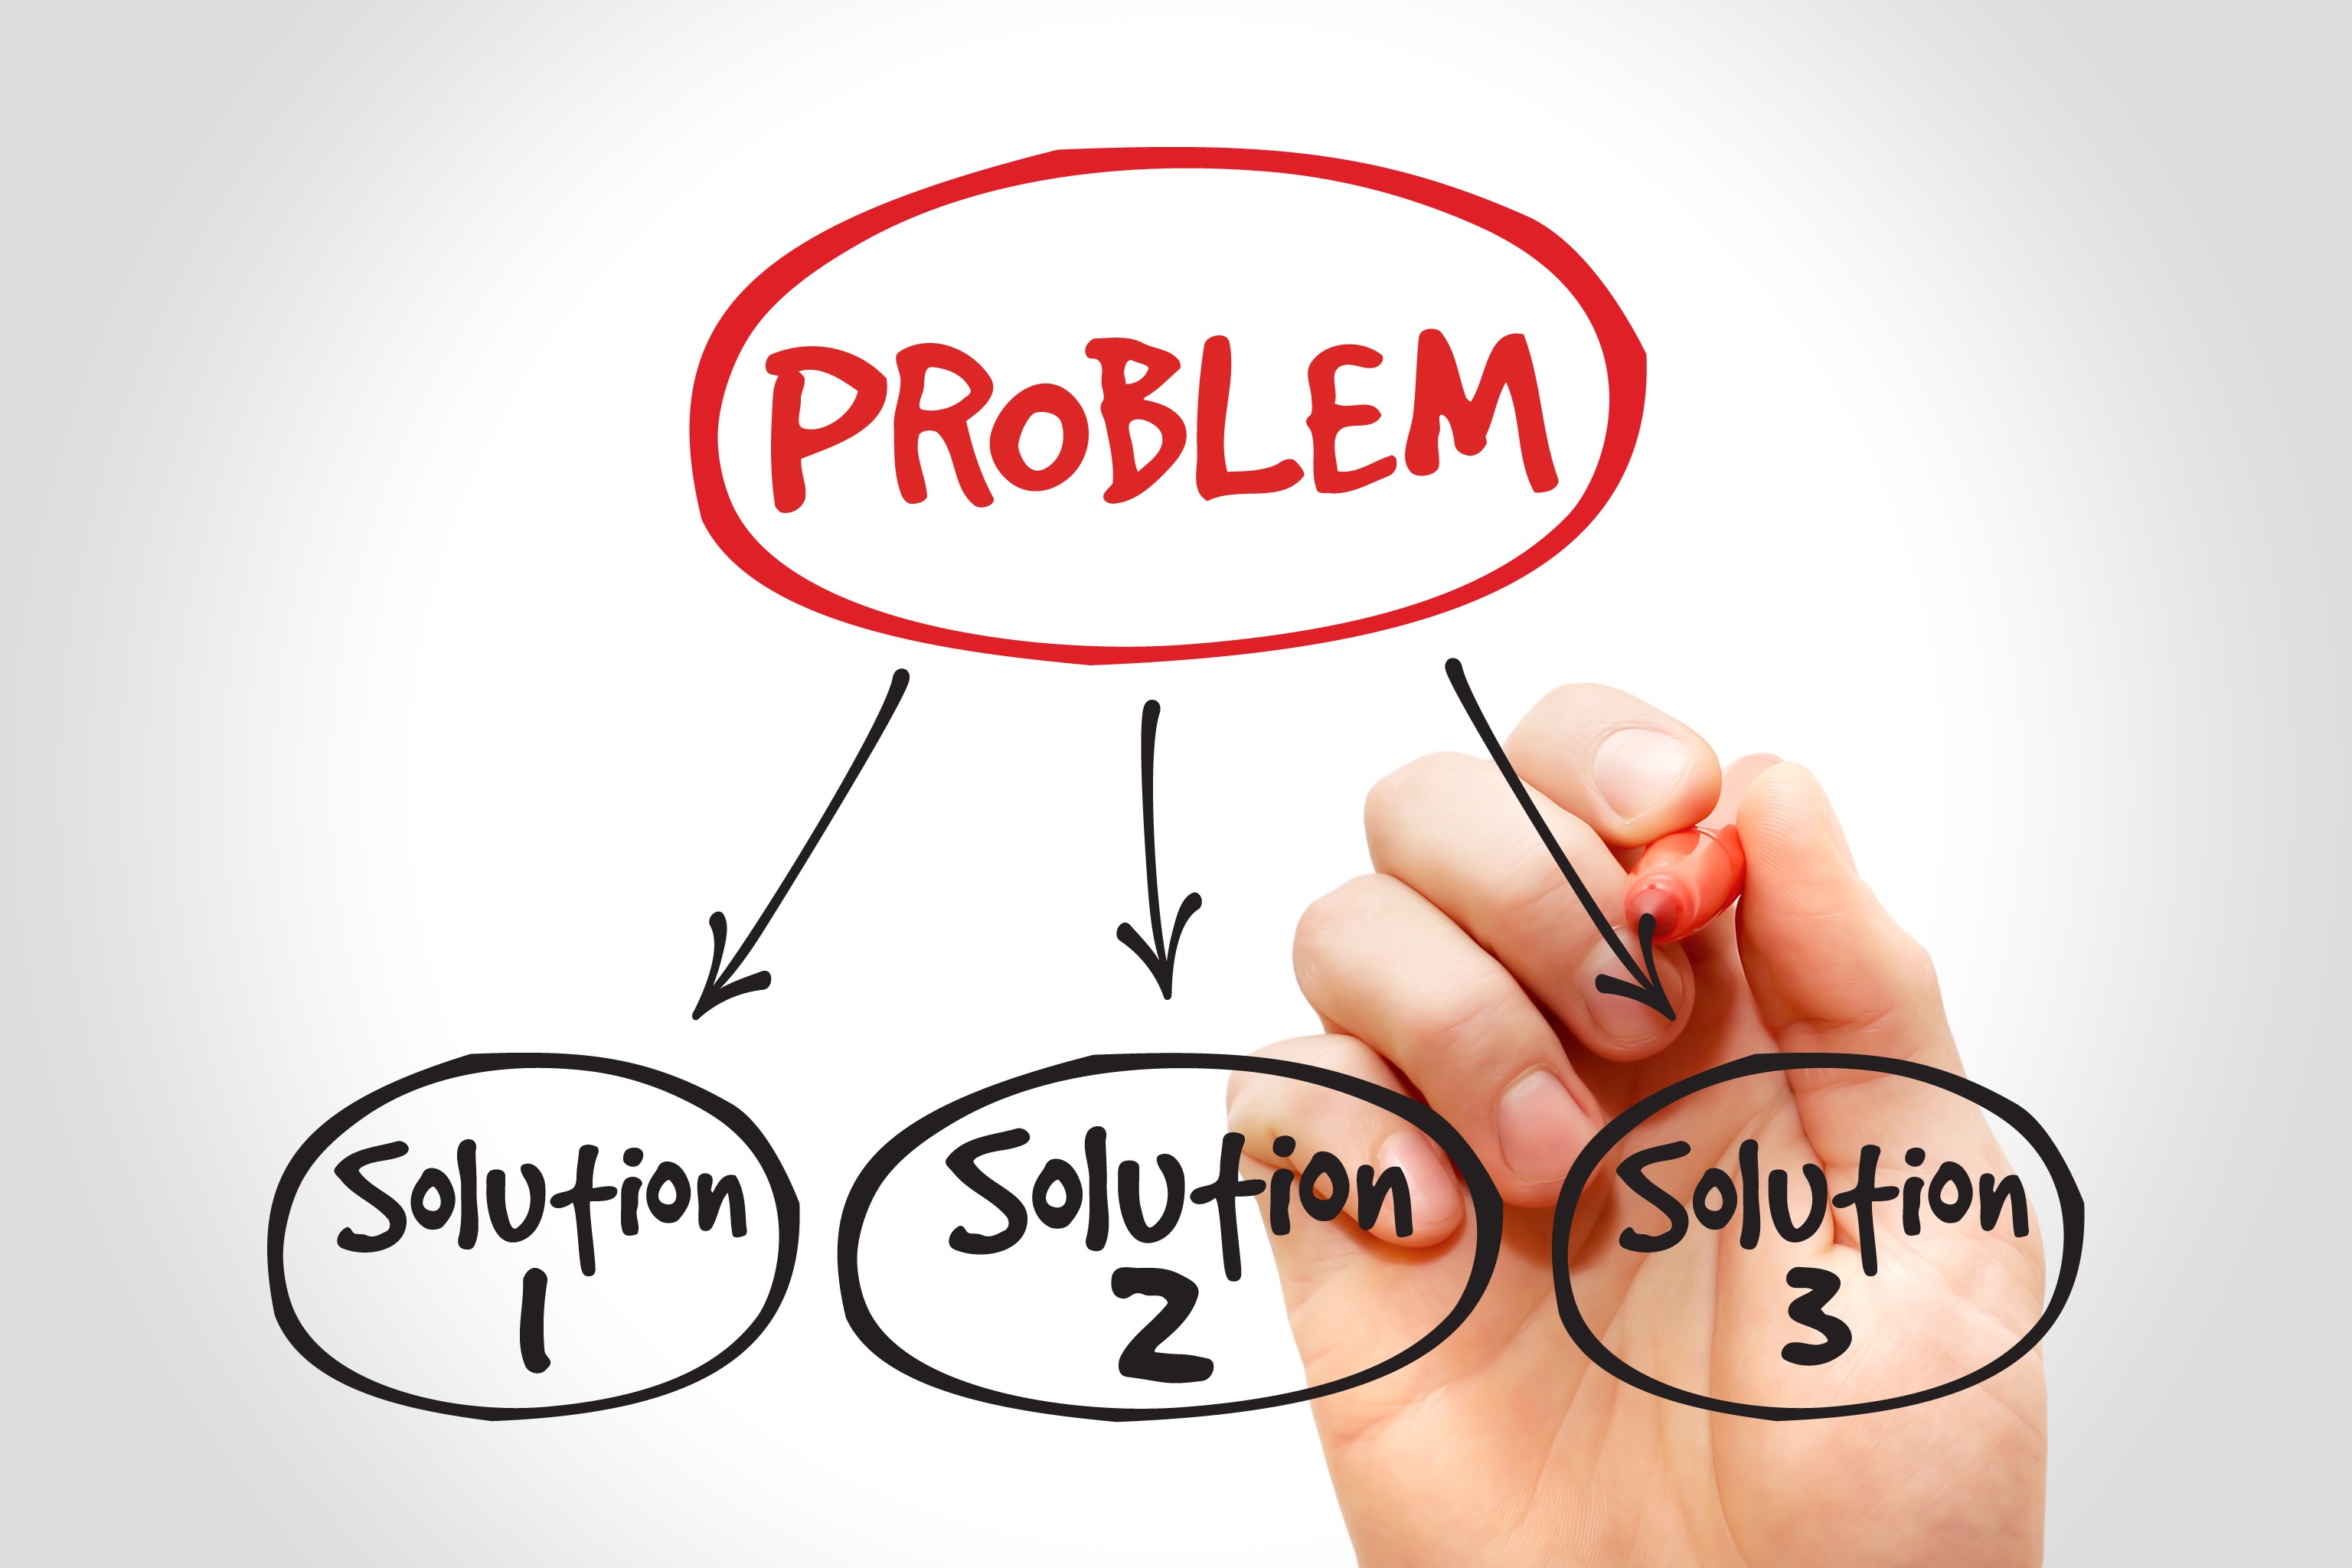 improving decision making and problem solving skills